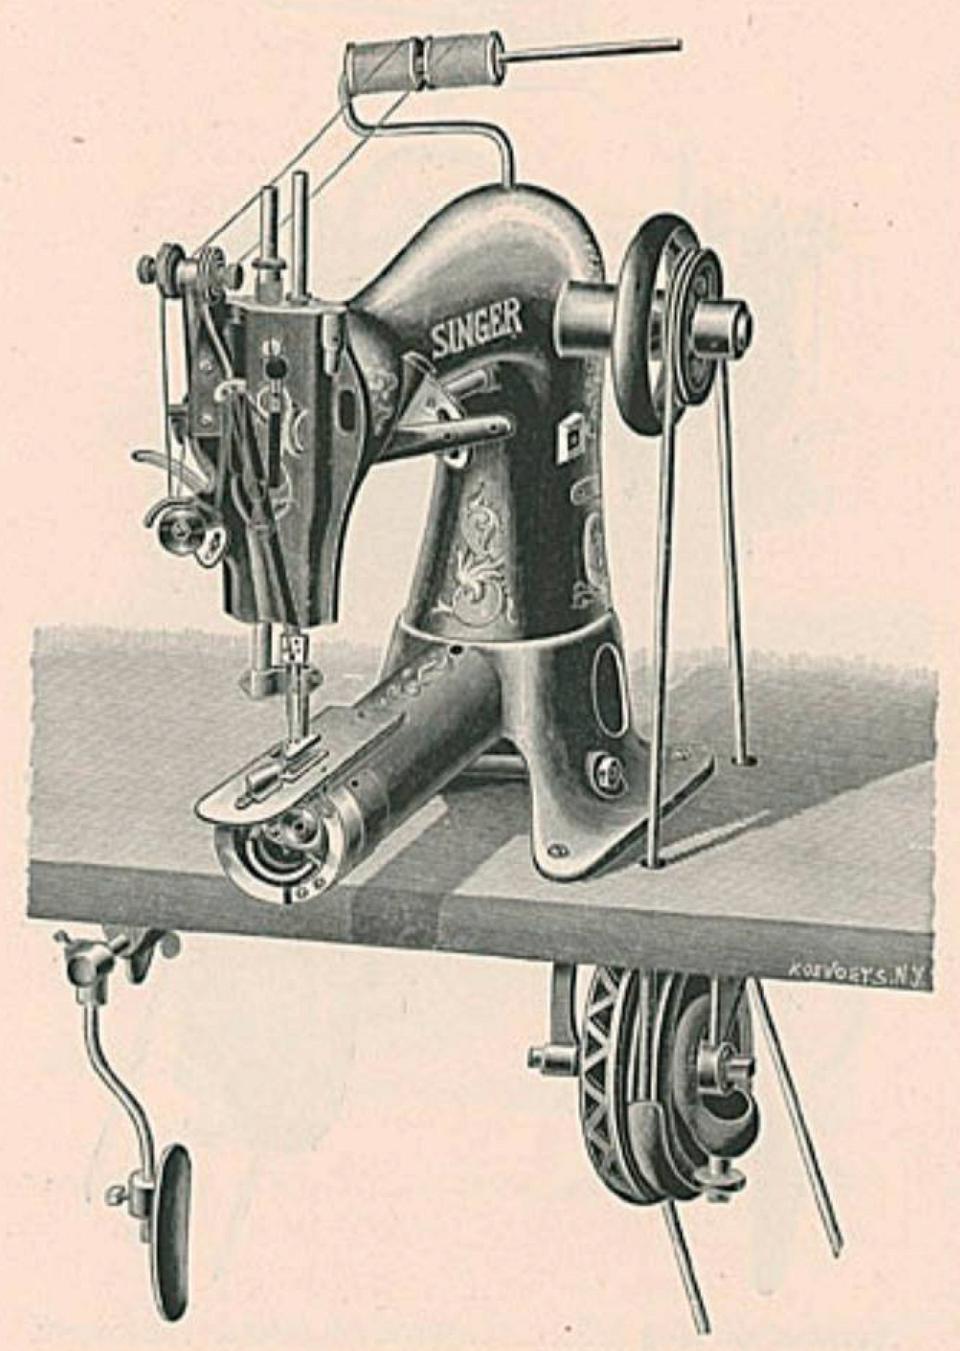 Singer Model 19-16 Sewing Machine